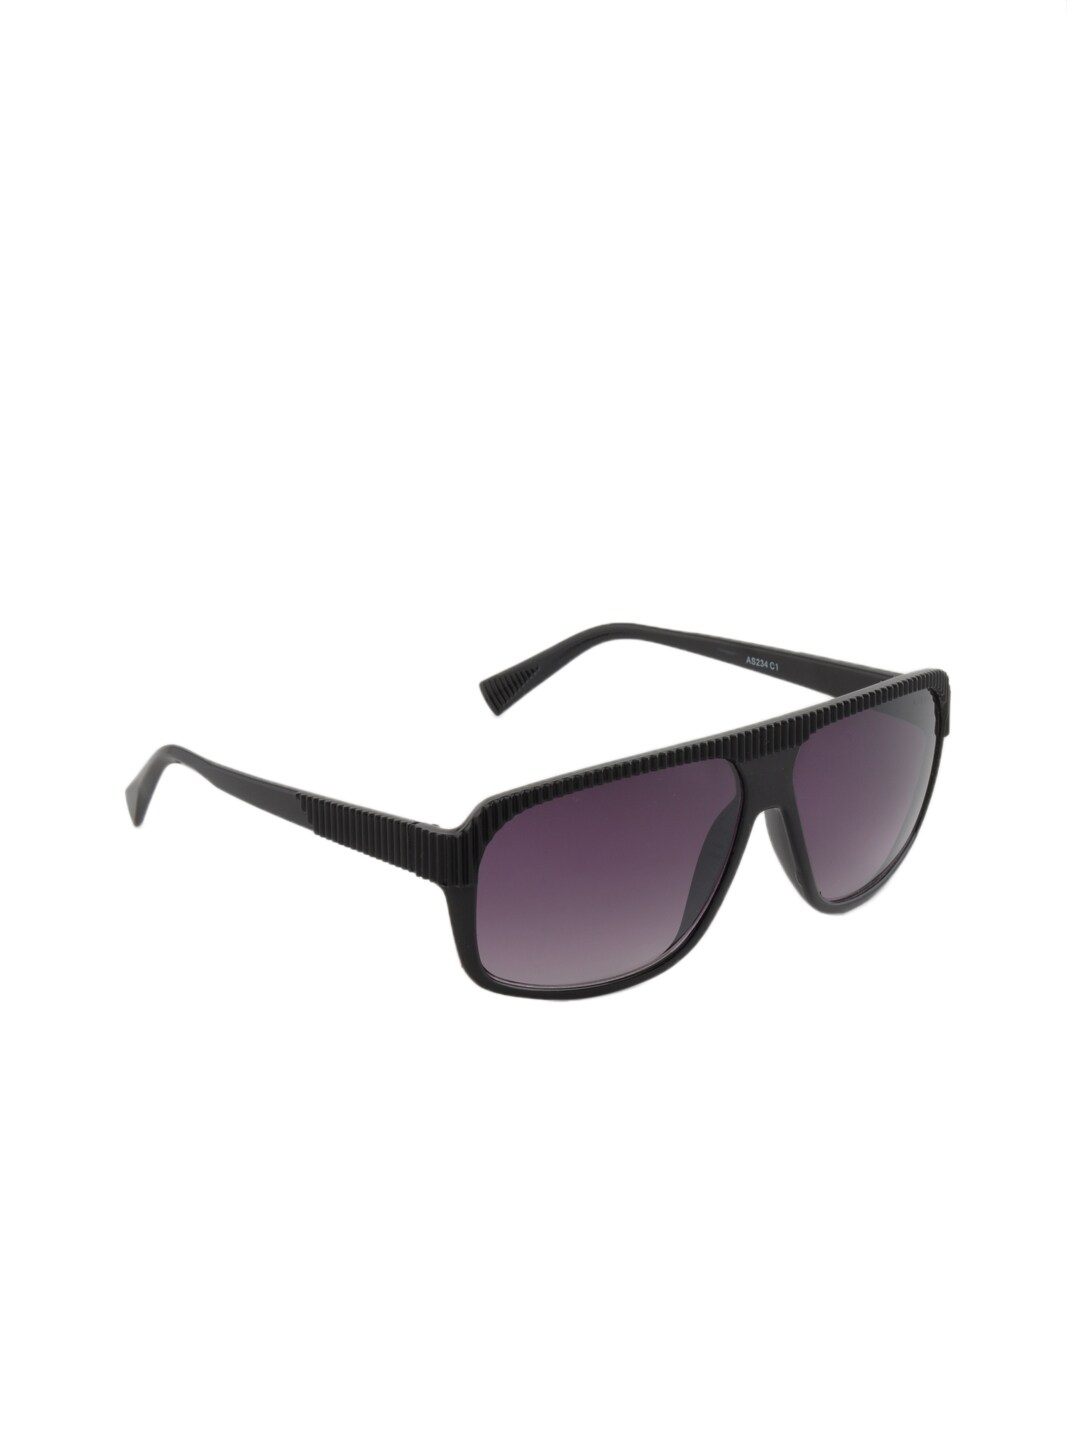 Allen Solly Unisex Sunglasses AS234-C1